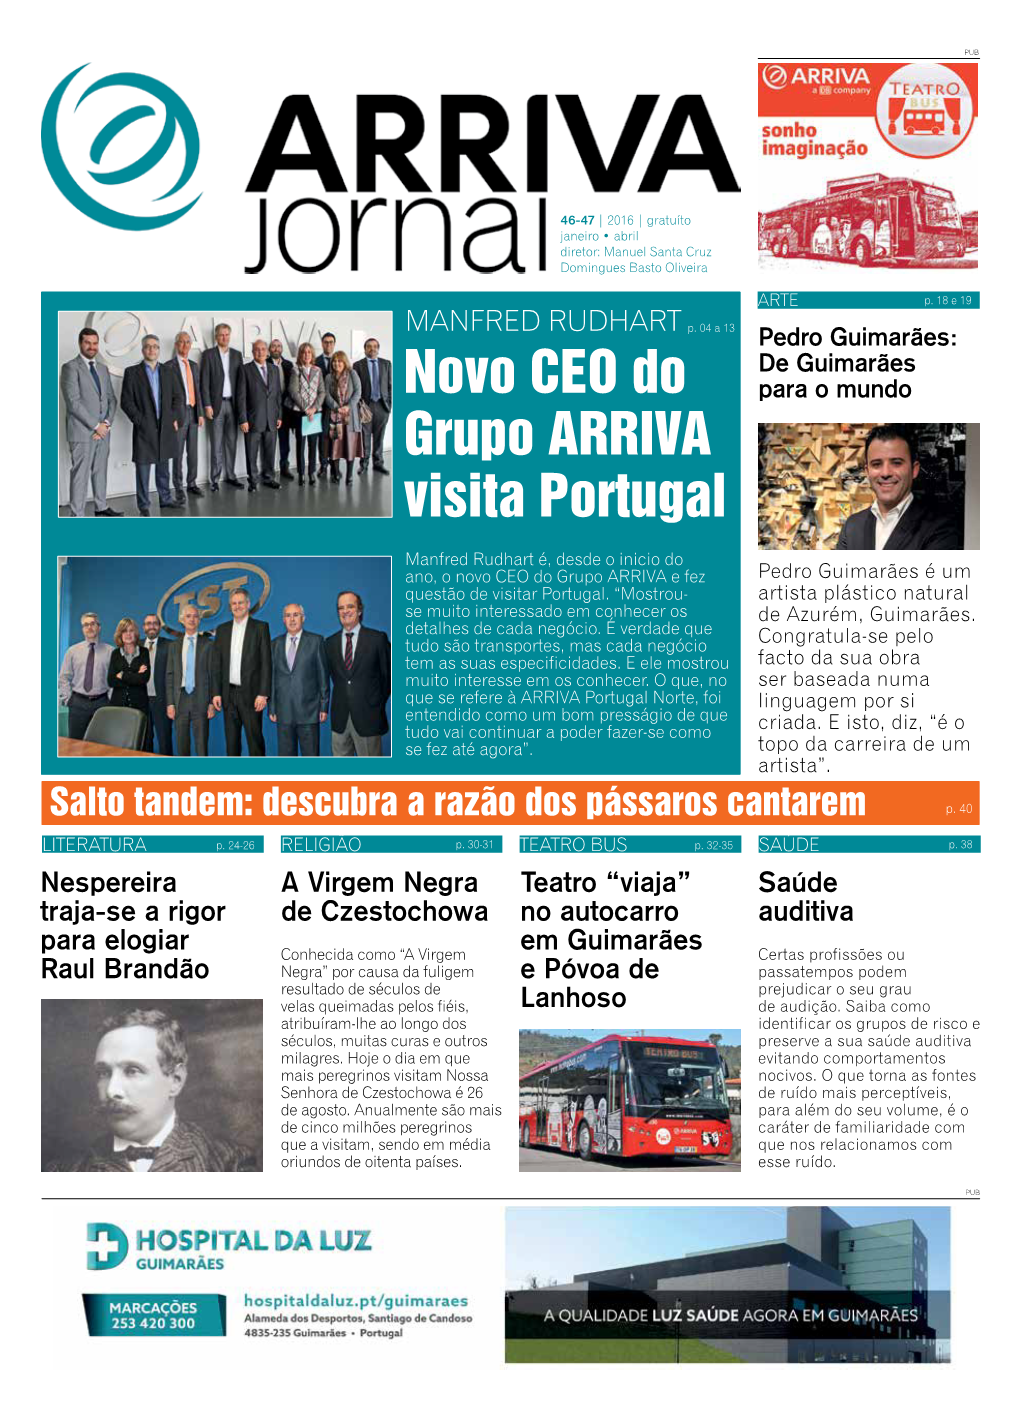 Novo CEO Do Grupo ARRIVA Visita Portugal